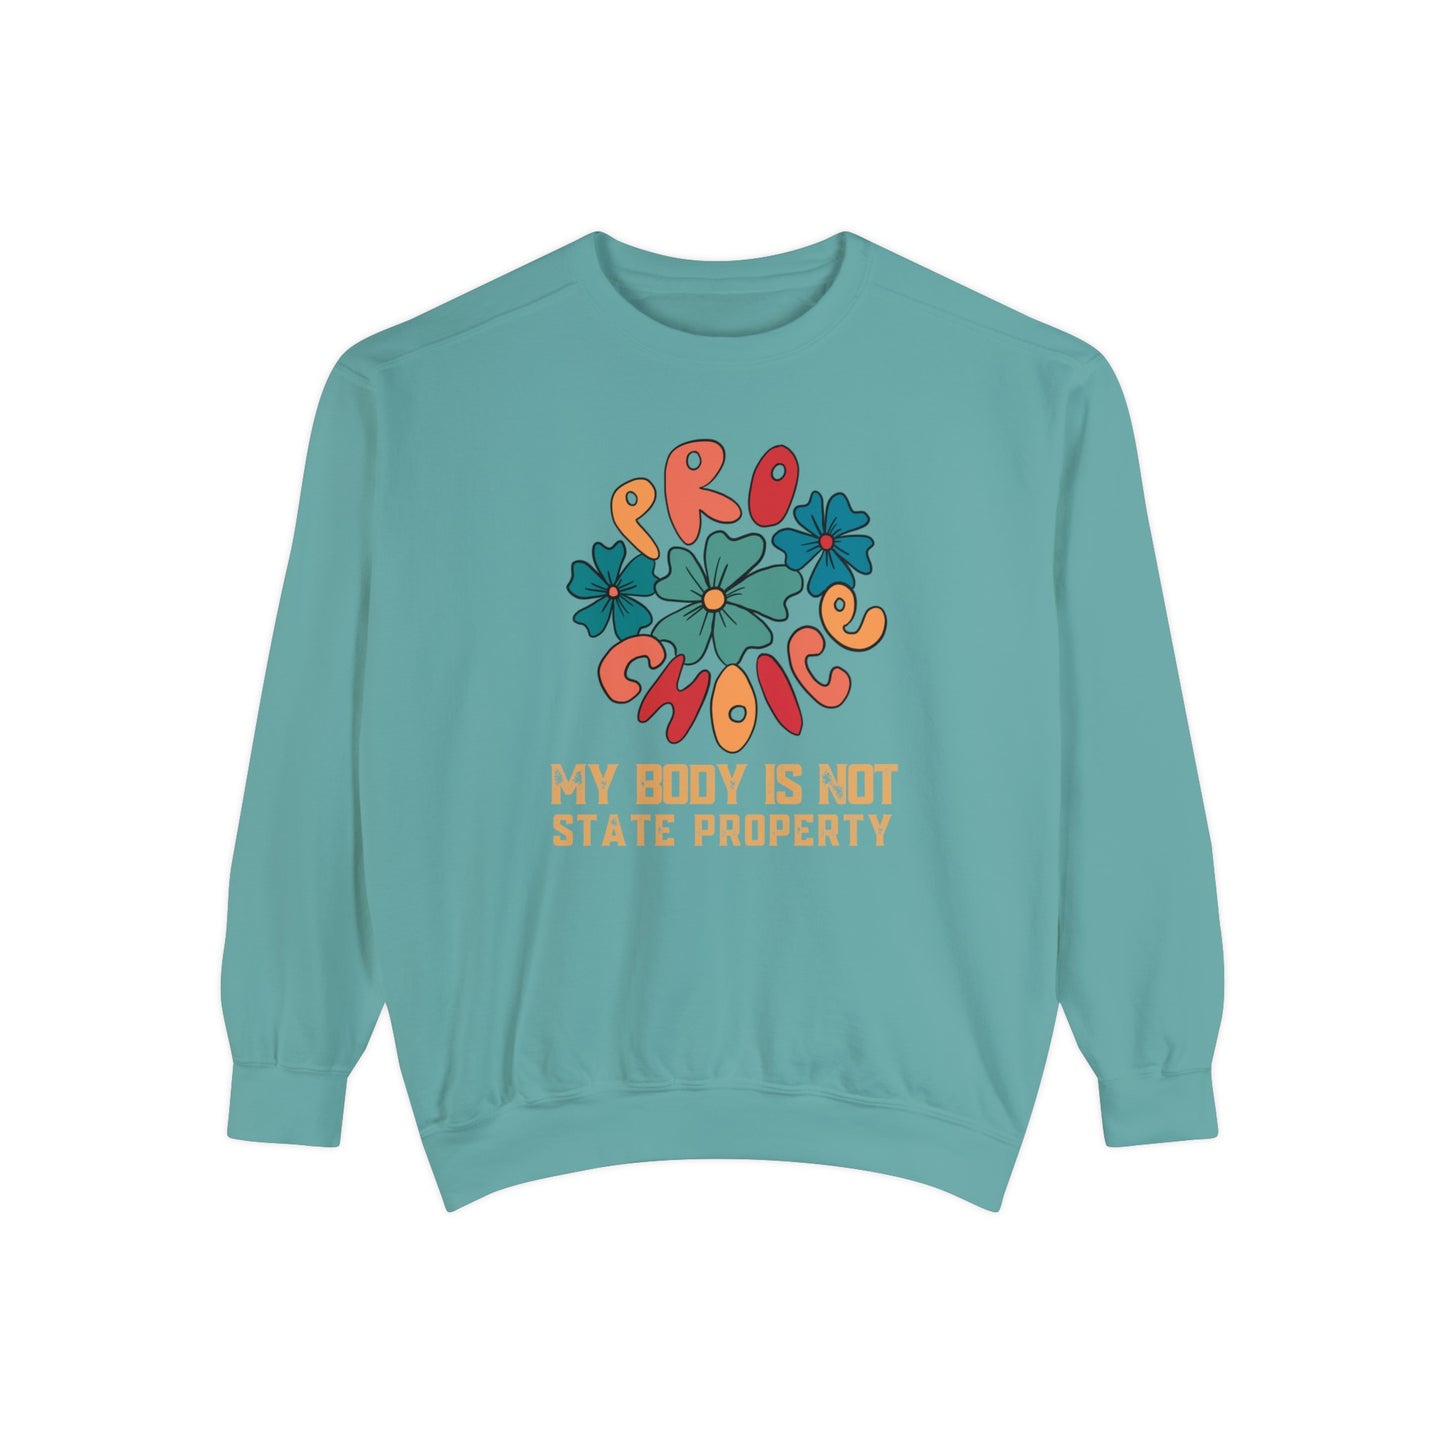 Seafoam color CC 1566 pro-choice sweatshirt